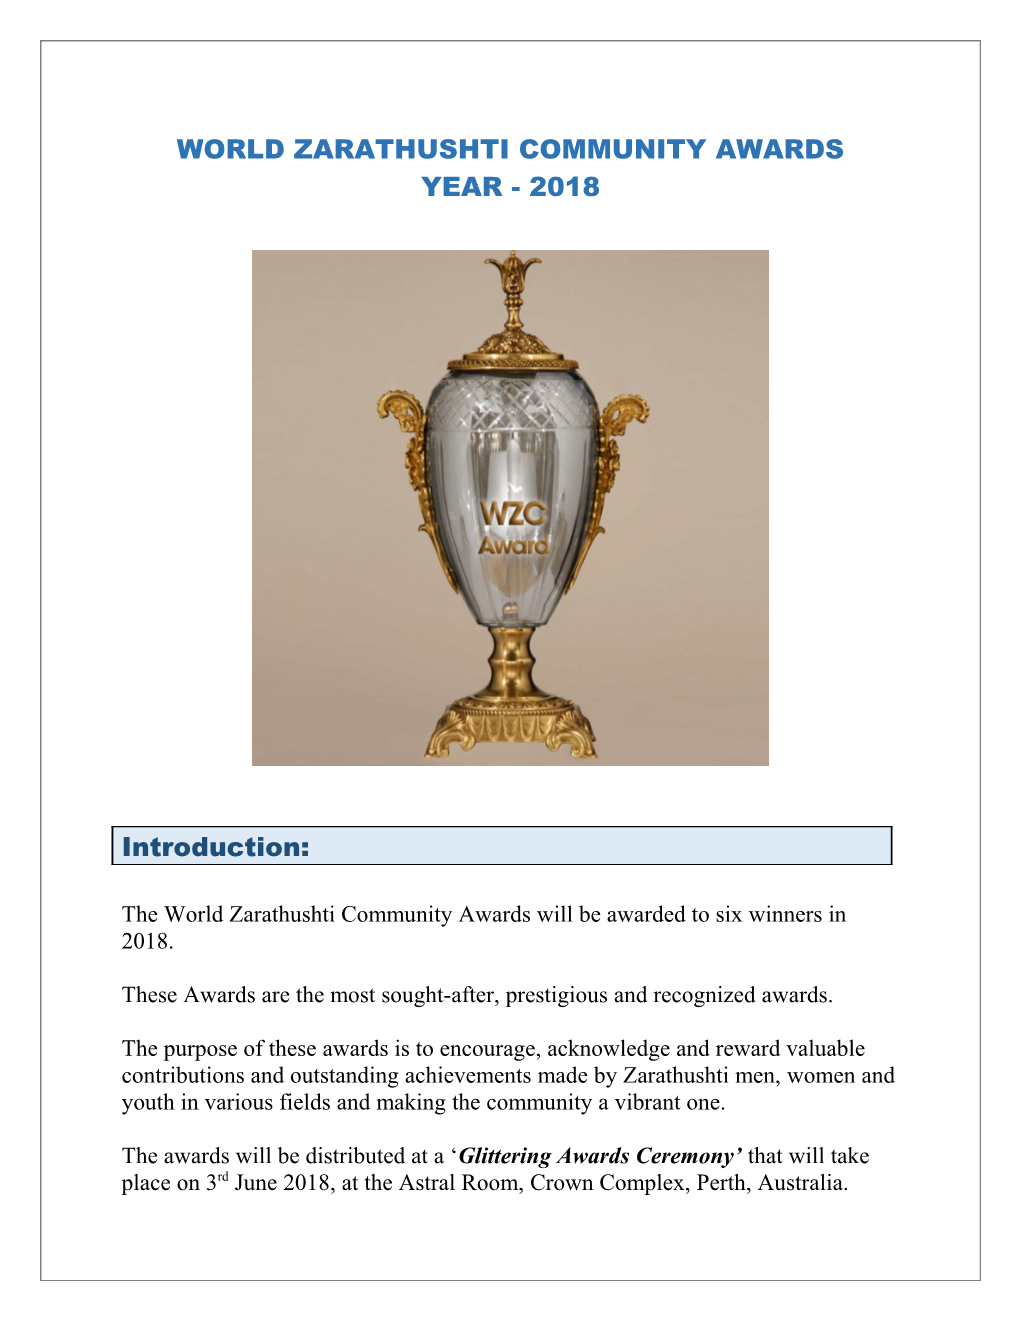 The World Zarathushti Community Awards Will Be Awarded to Six Winners in 2018